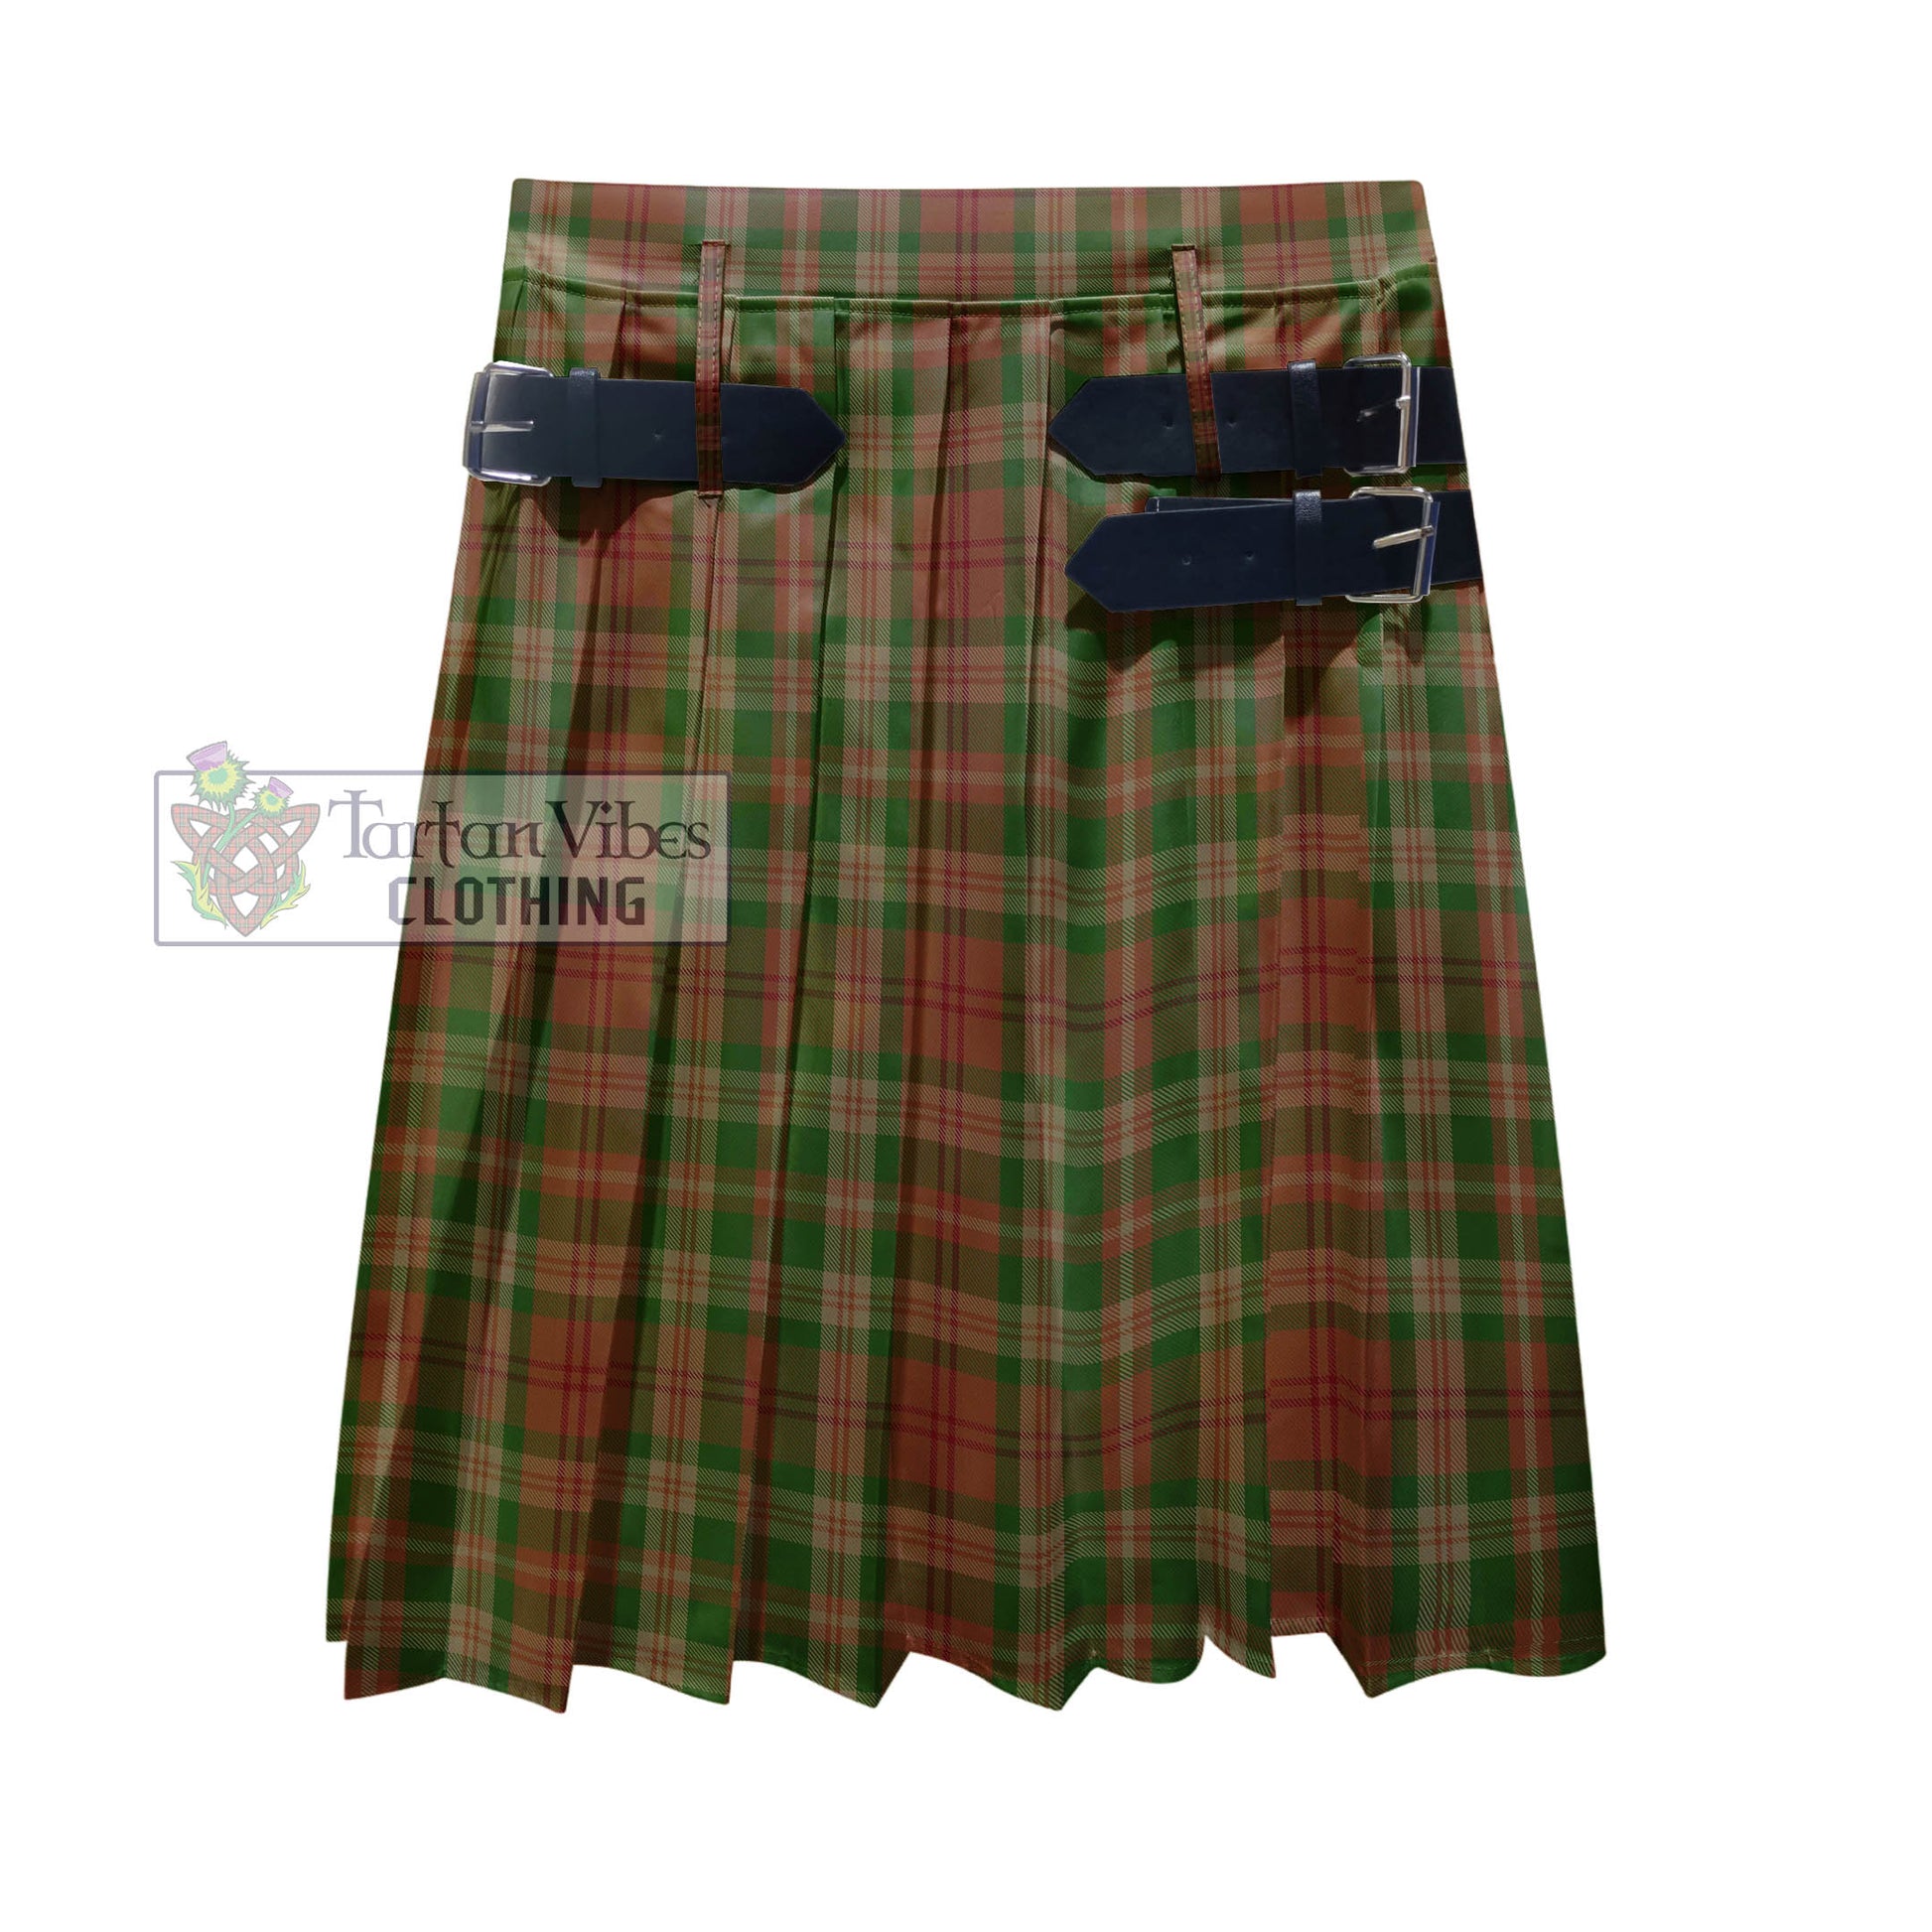 Tartan Vibes Clothing Pierce Tartan Men's Pleated Skirt - Fashion Casual Retro Scottish Style